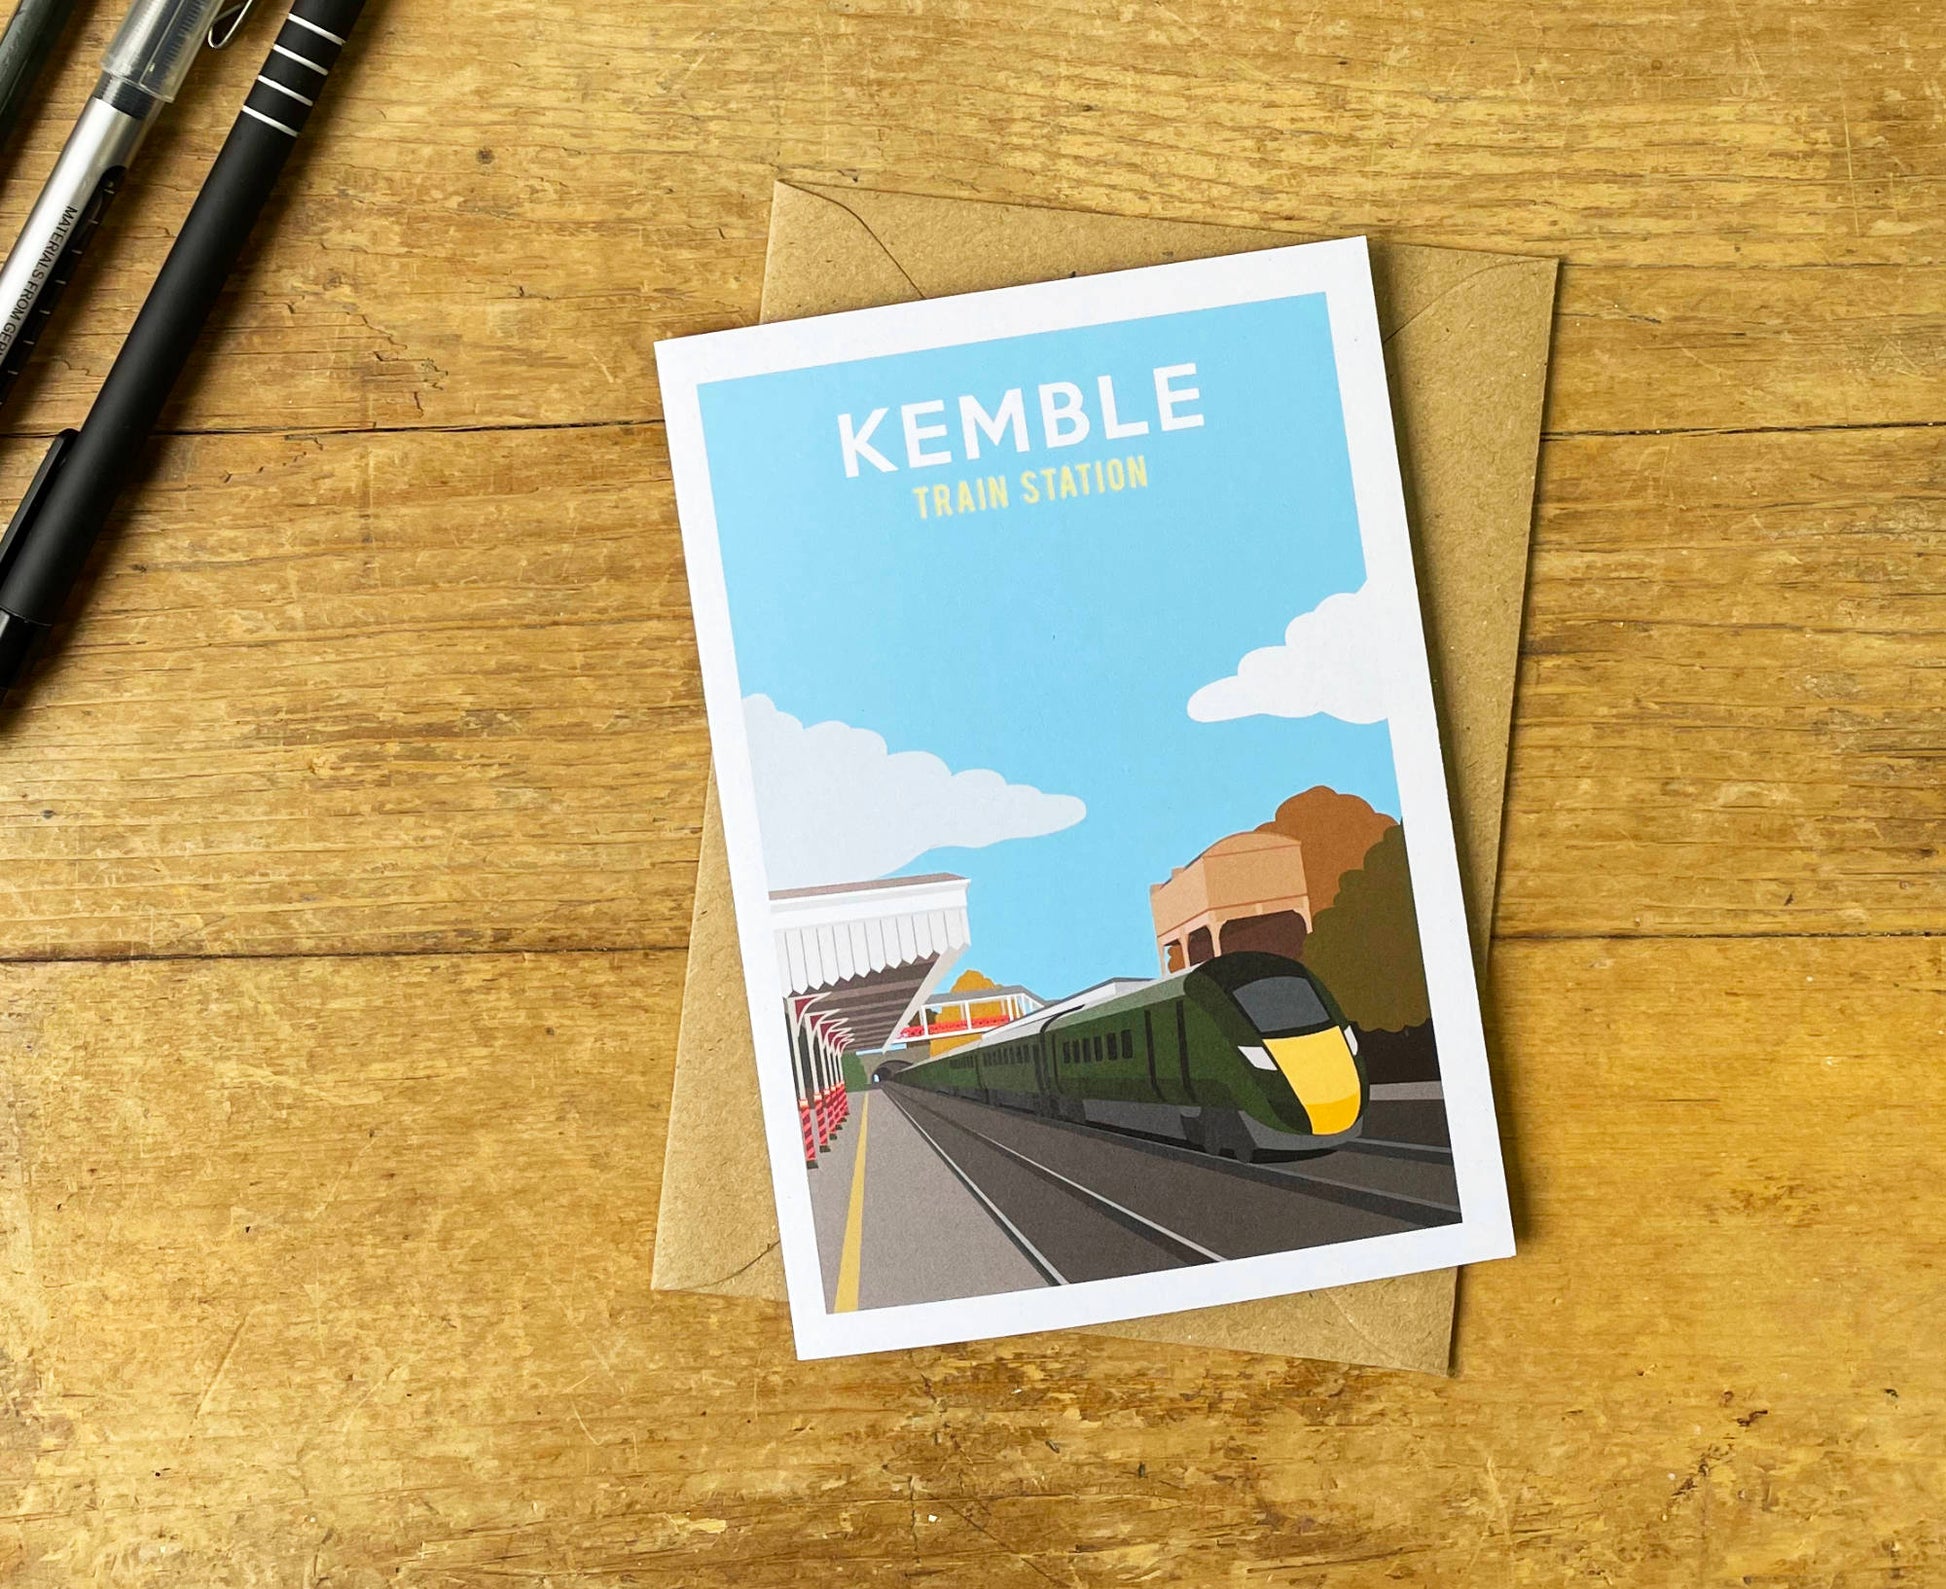 Kemble Train Station Greeting Card on desk